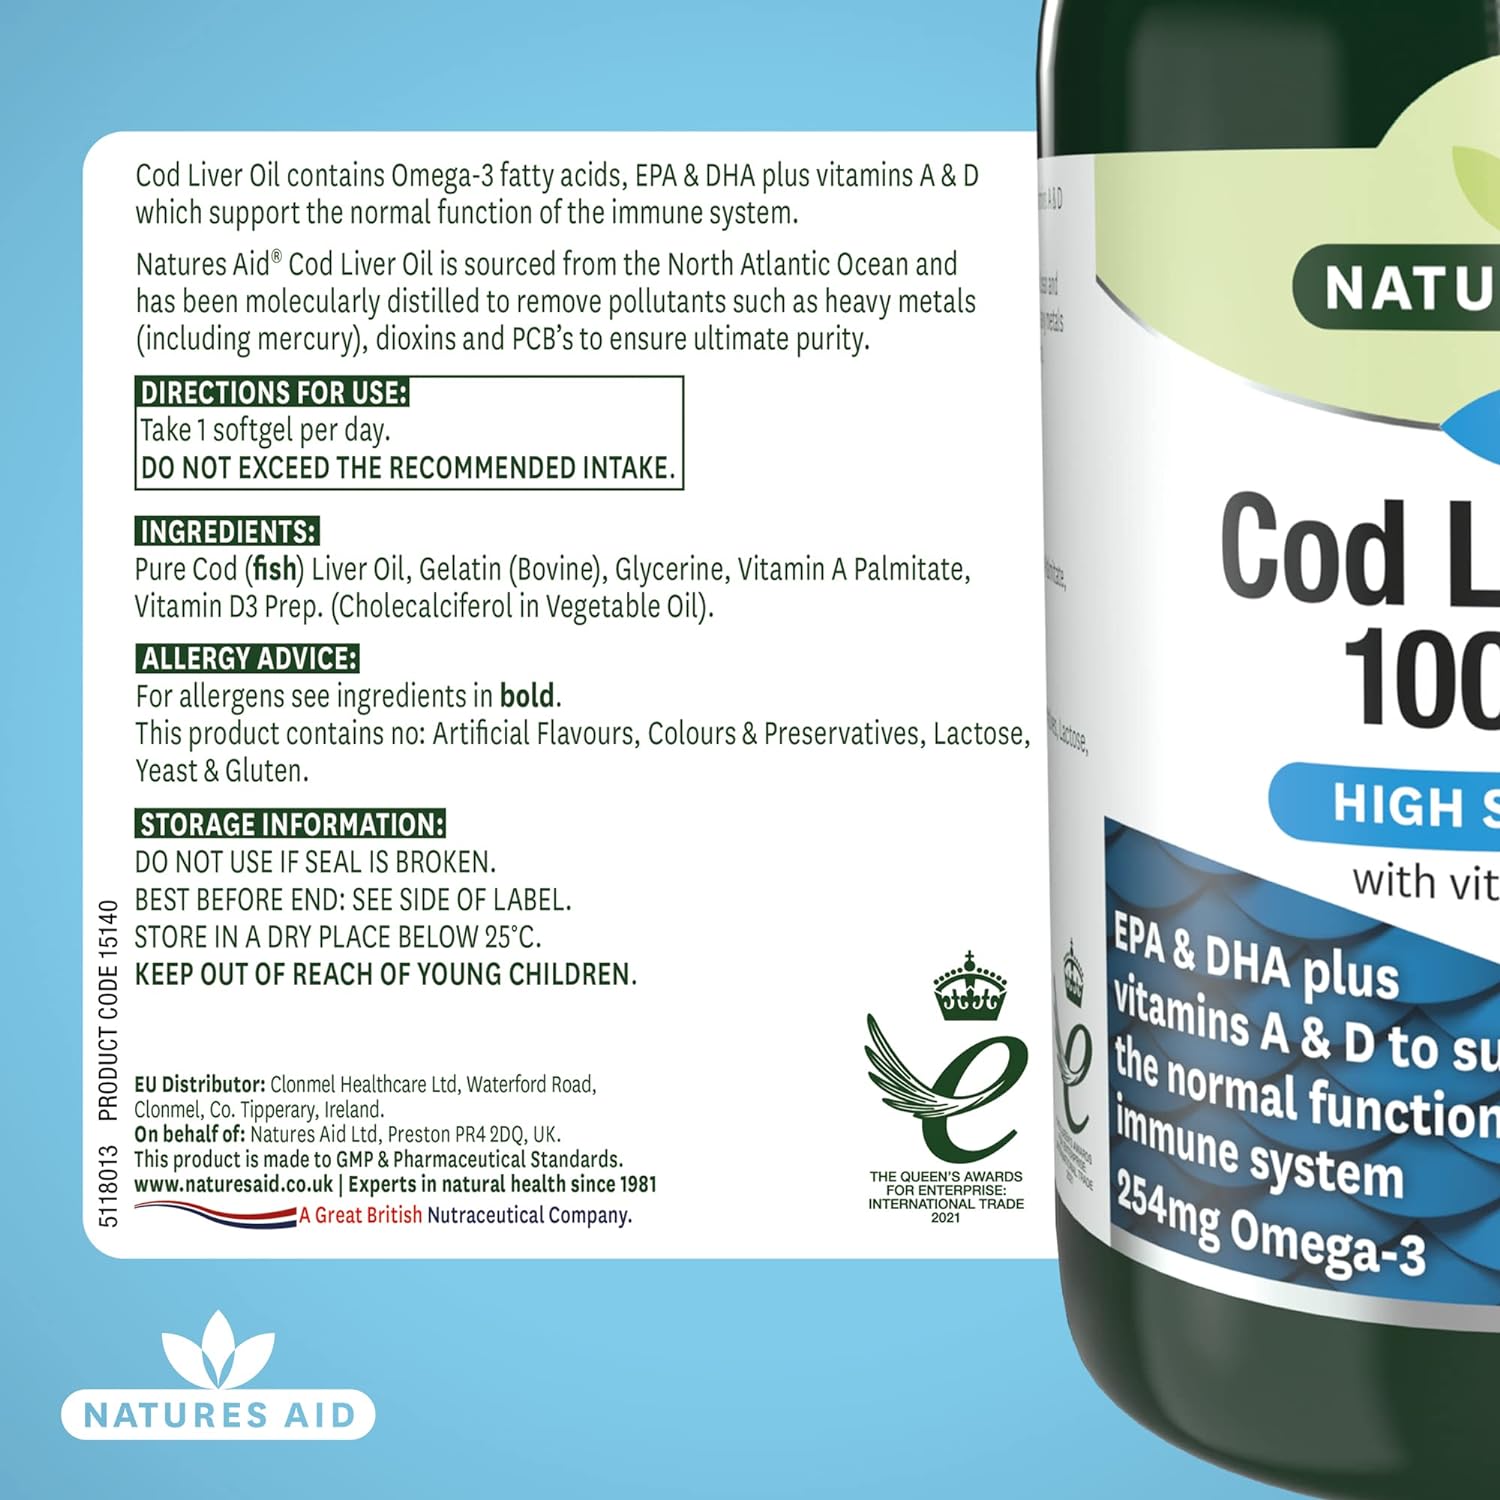 Omega-3 Cod Liver Oil (High Strength) 1000mg 180 Softgels